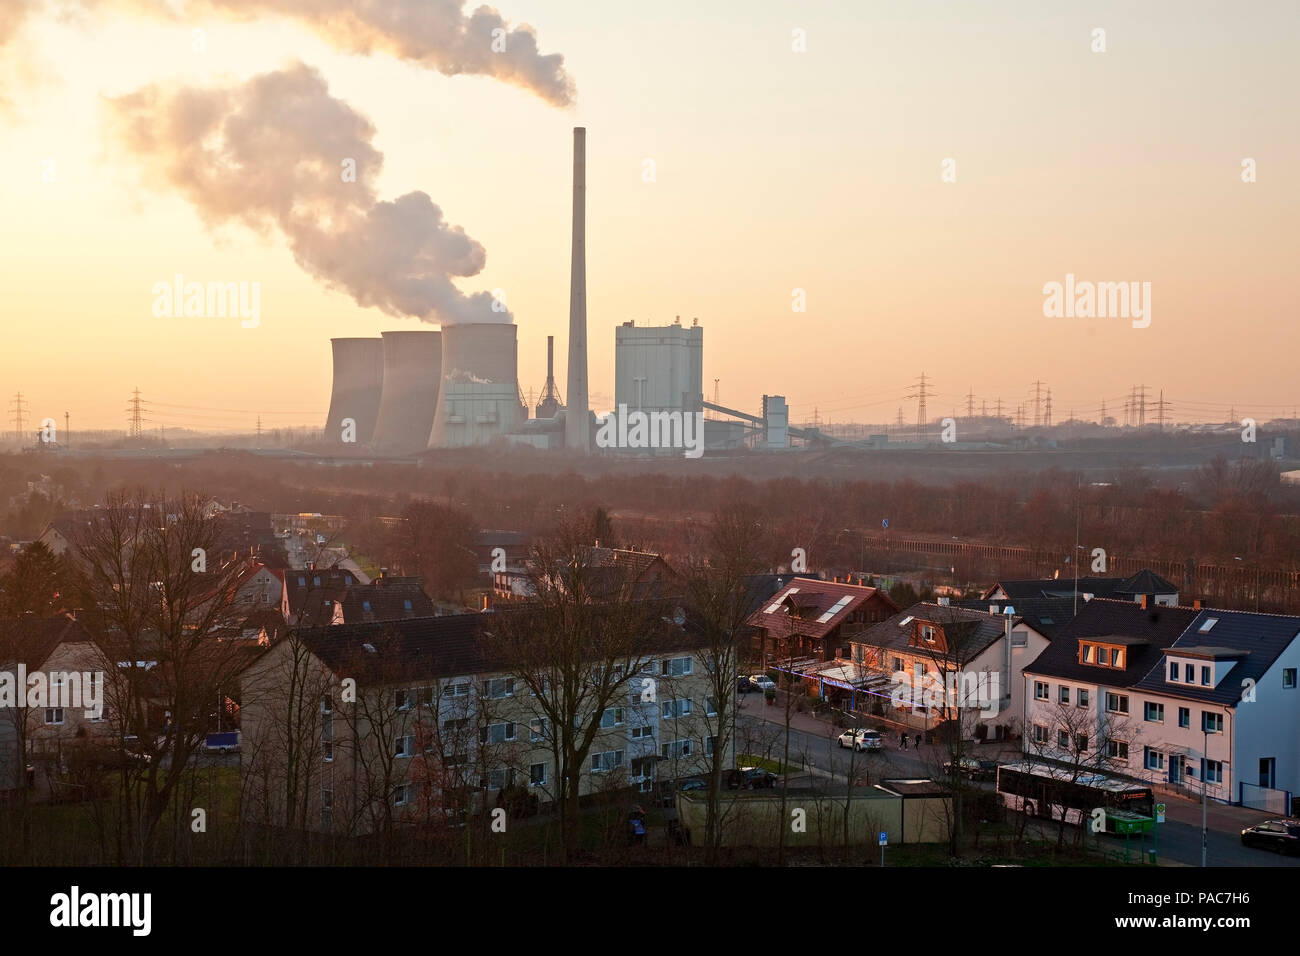 Housing estate with the Gersteinwerk power plant, Hamm, Ruhr Area, North Rhine-Westphalia, Germany Stock Photo